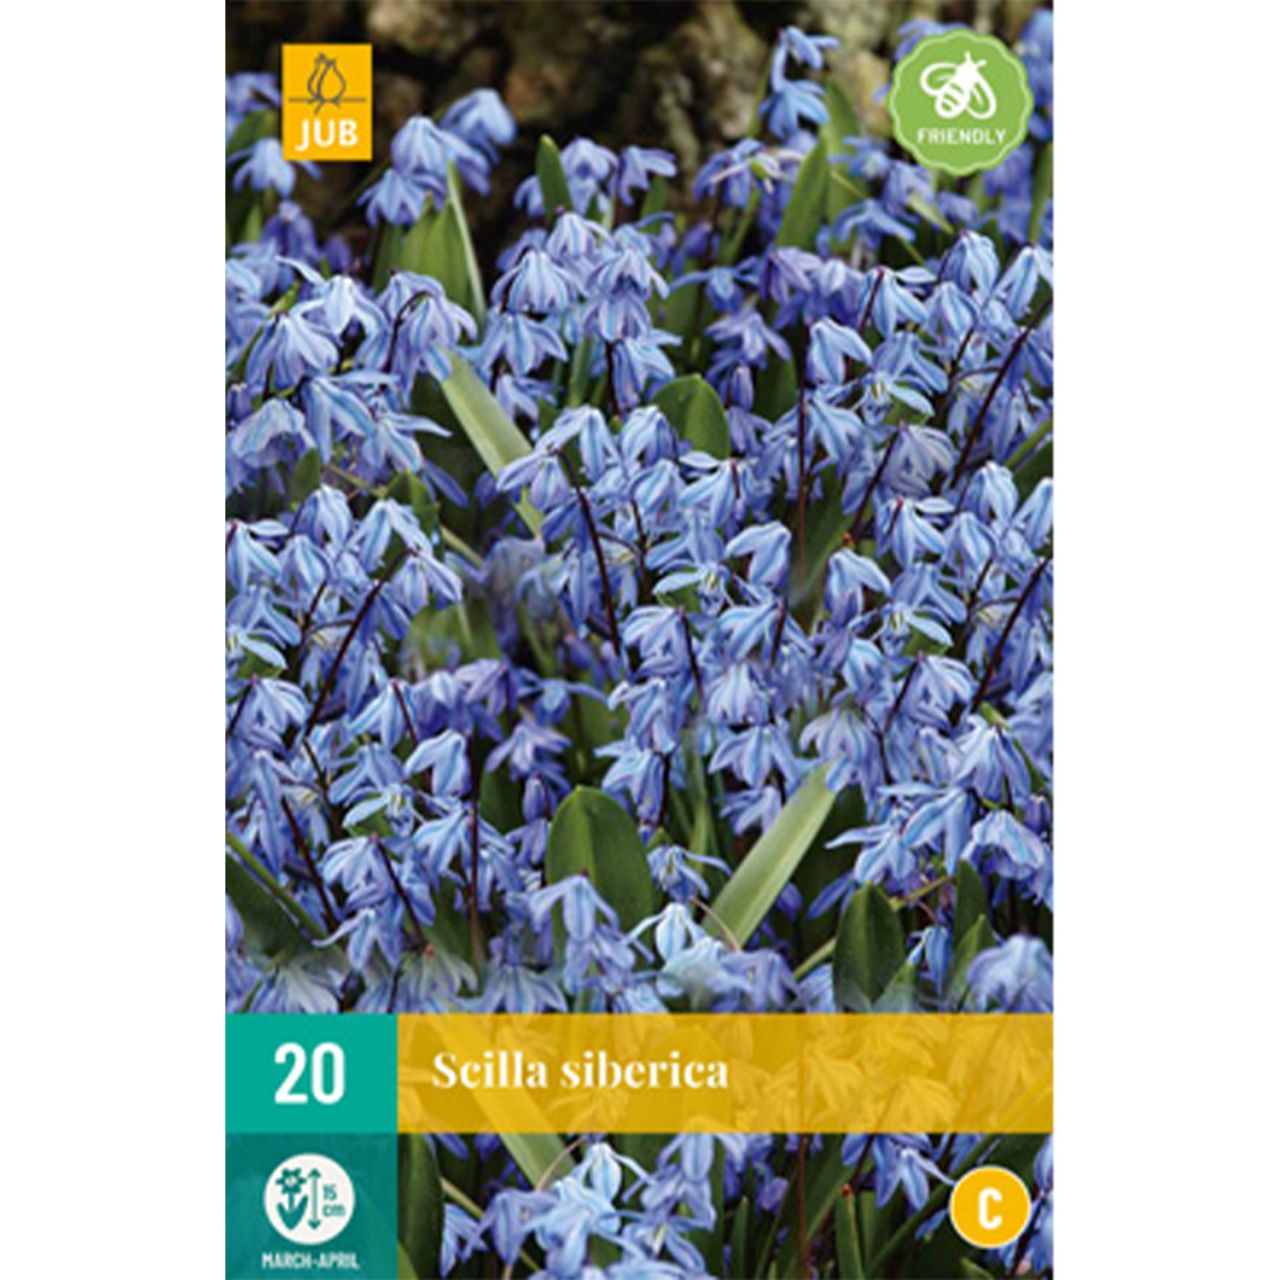 Kategorie <b>Herbst-Blumenzwiebeln </b> - Blausternchen - 20 Stück - Scilla sibirica